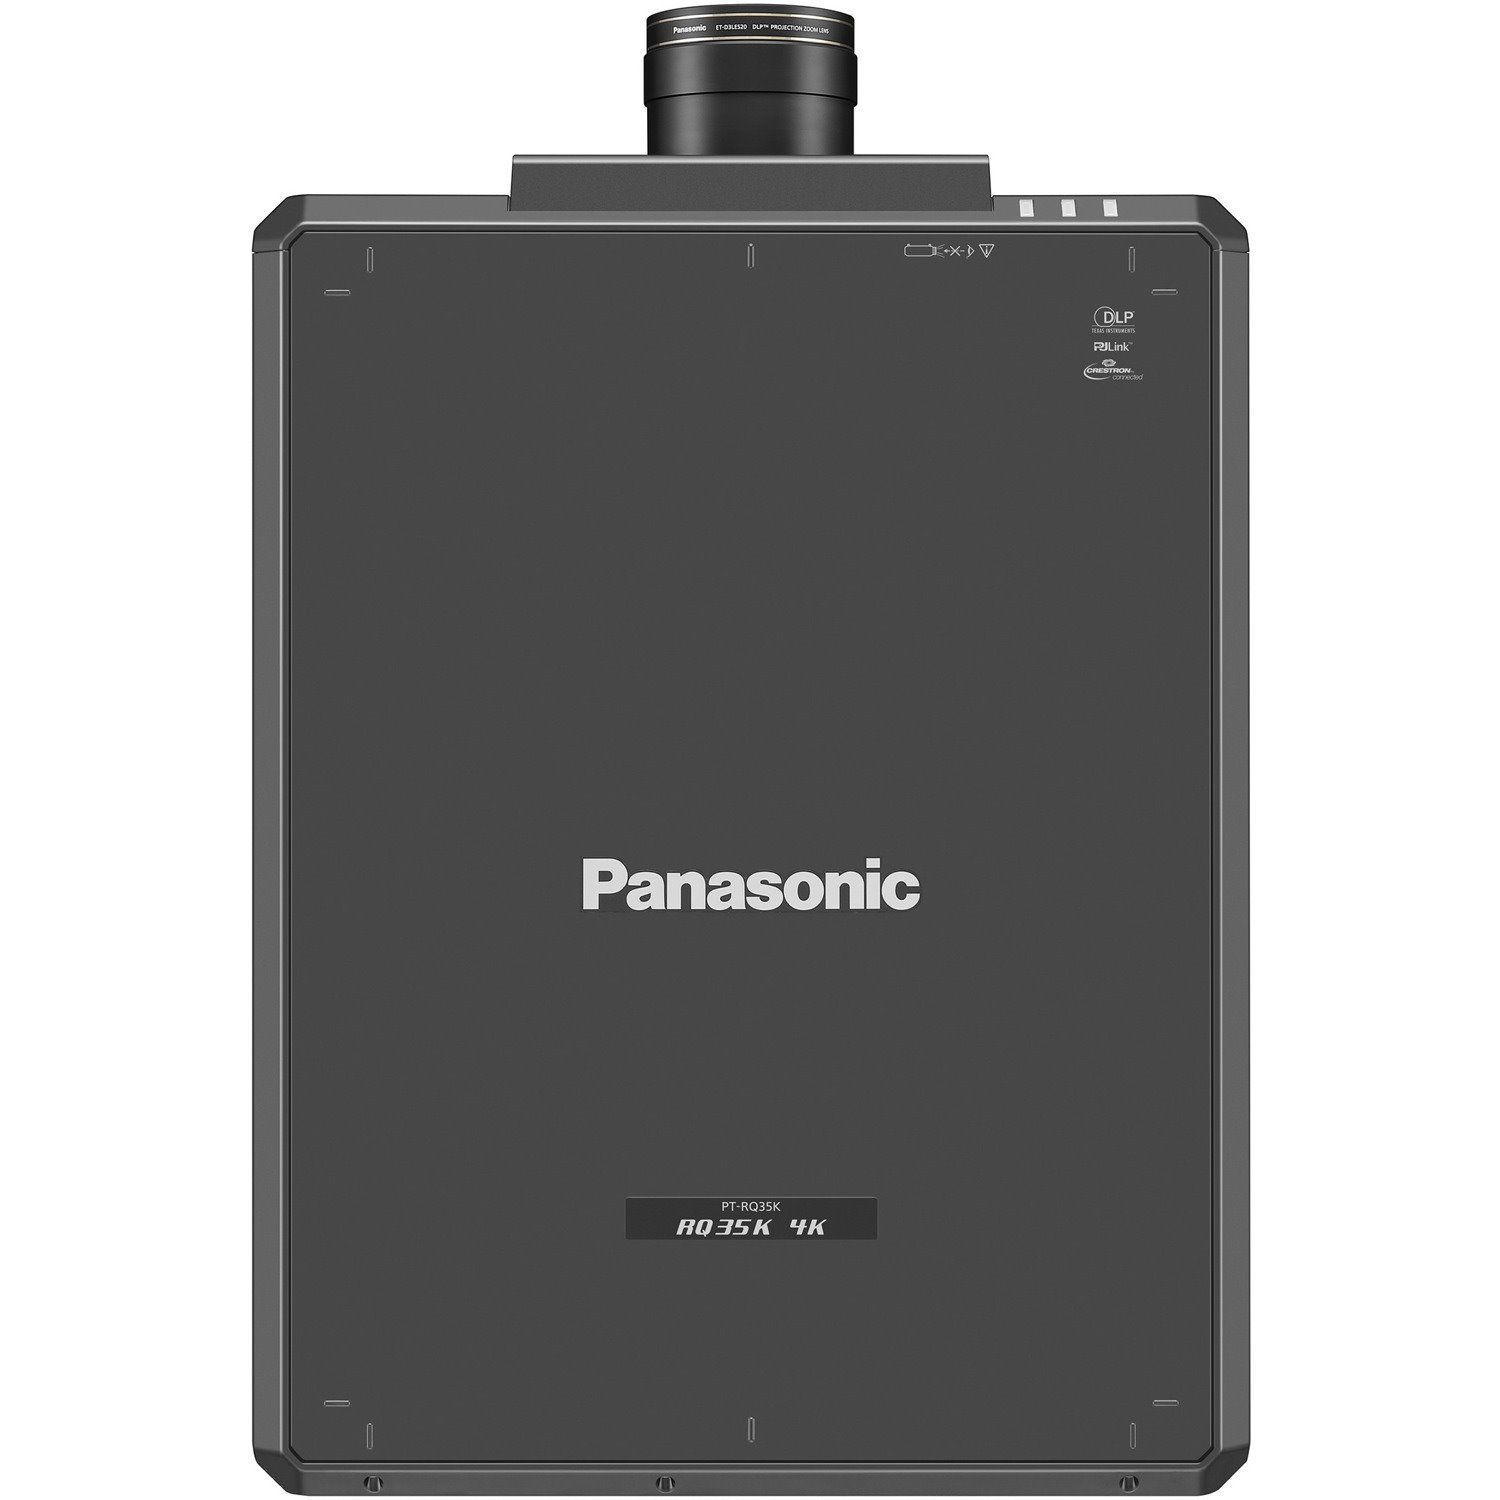 Panasonic SOLID SHINE PT-RQ35K 3D DLP Projector - 16:10